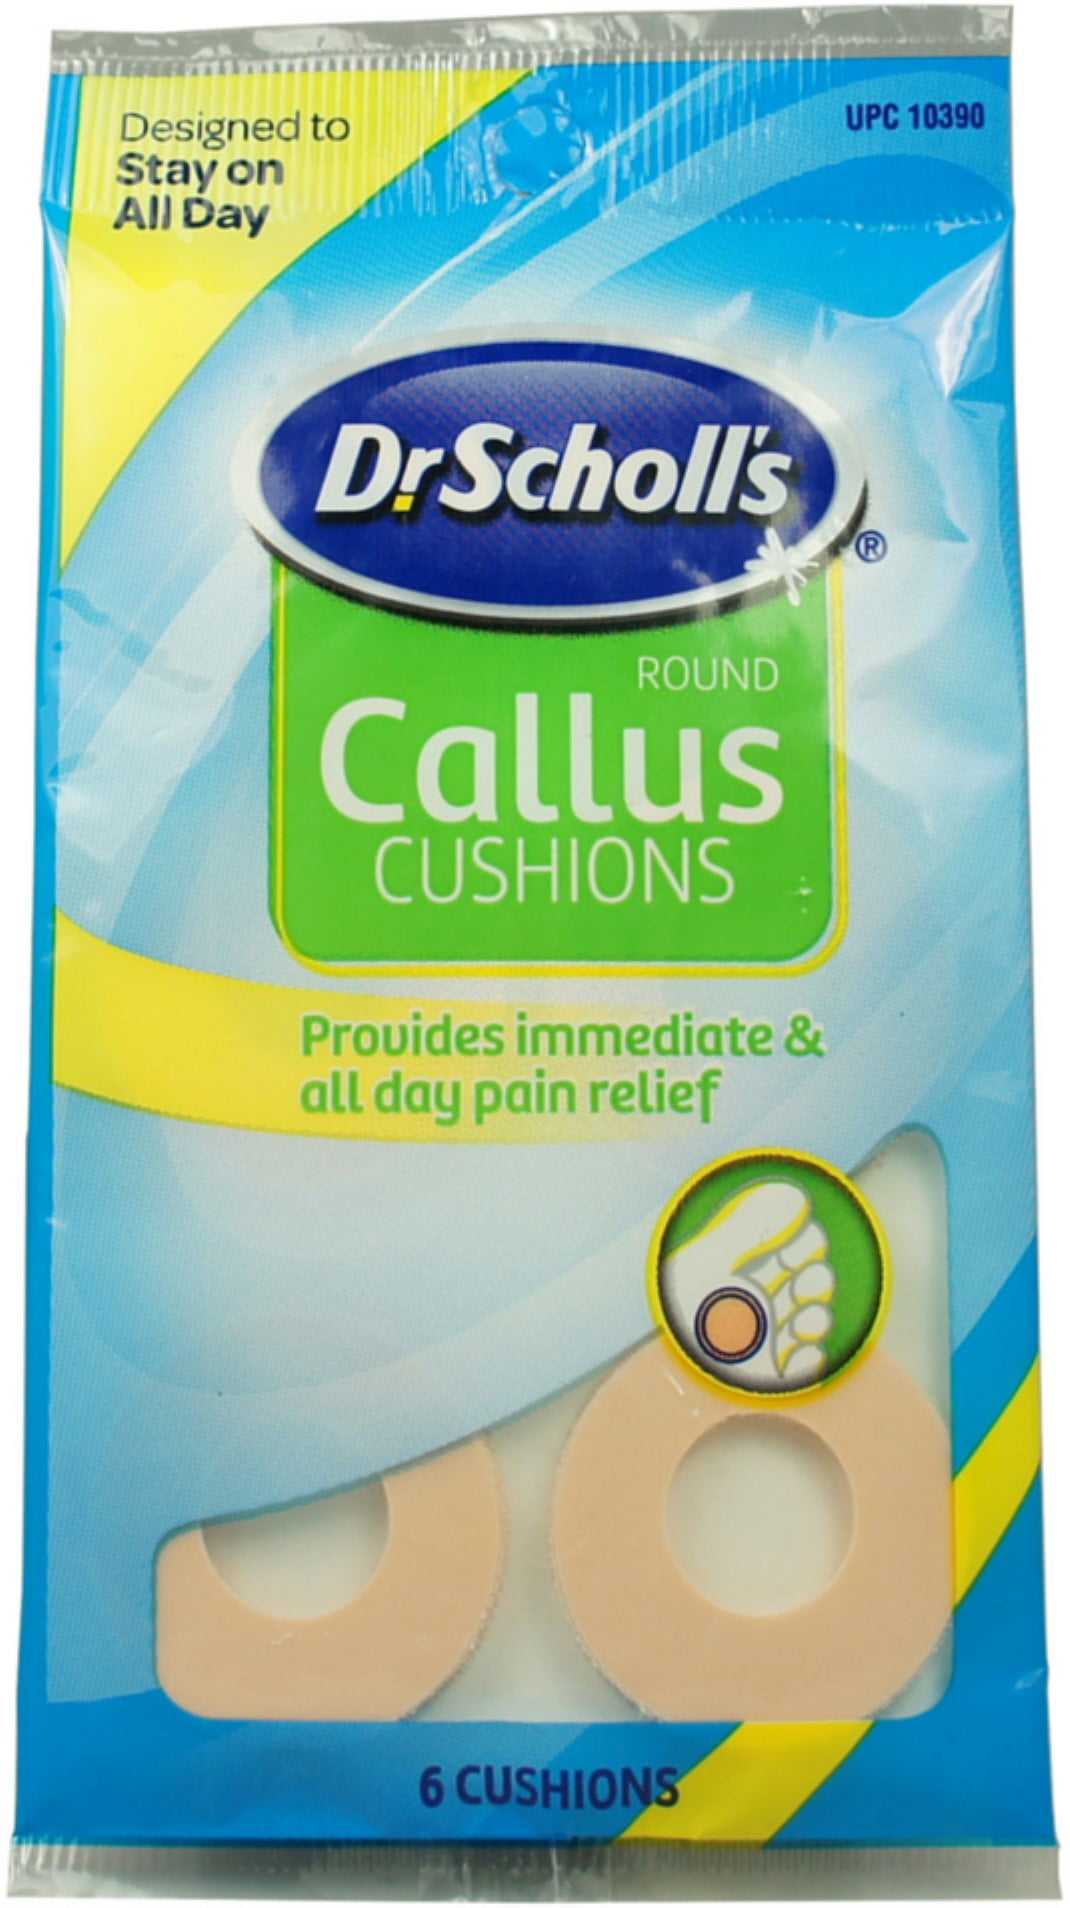 Dr. Scholl's Callus Cushions Round 6 